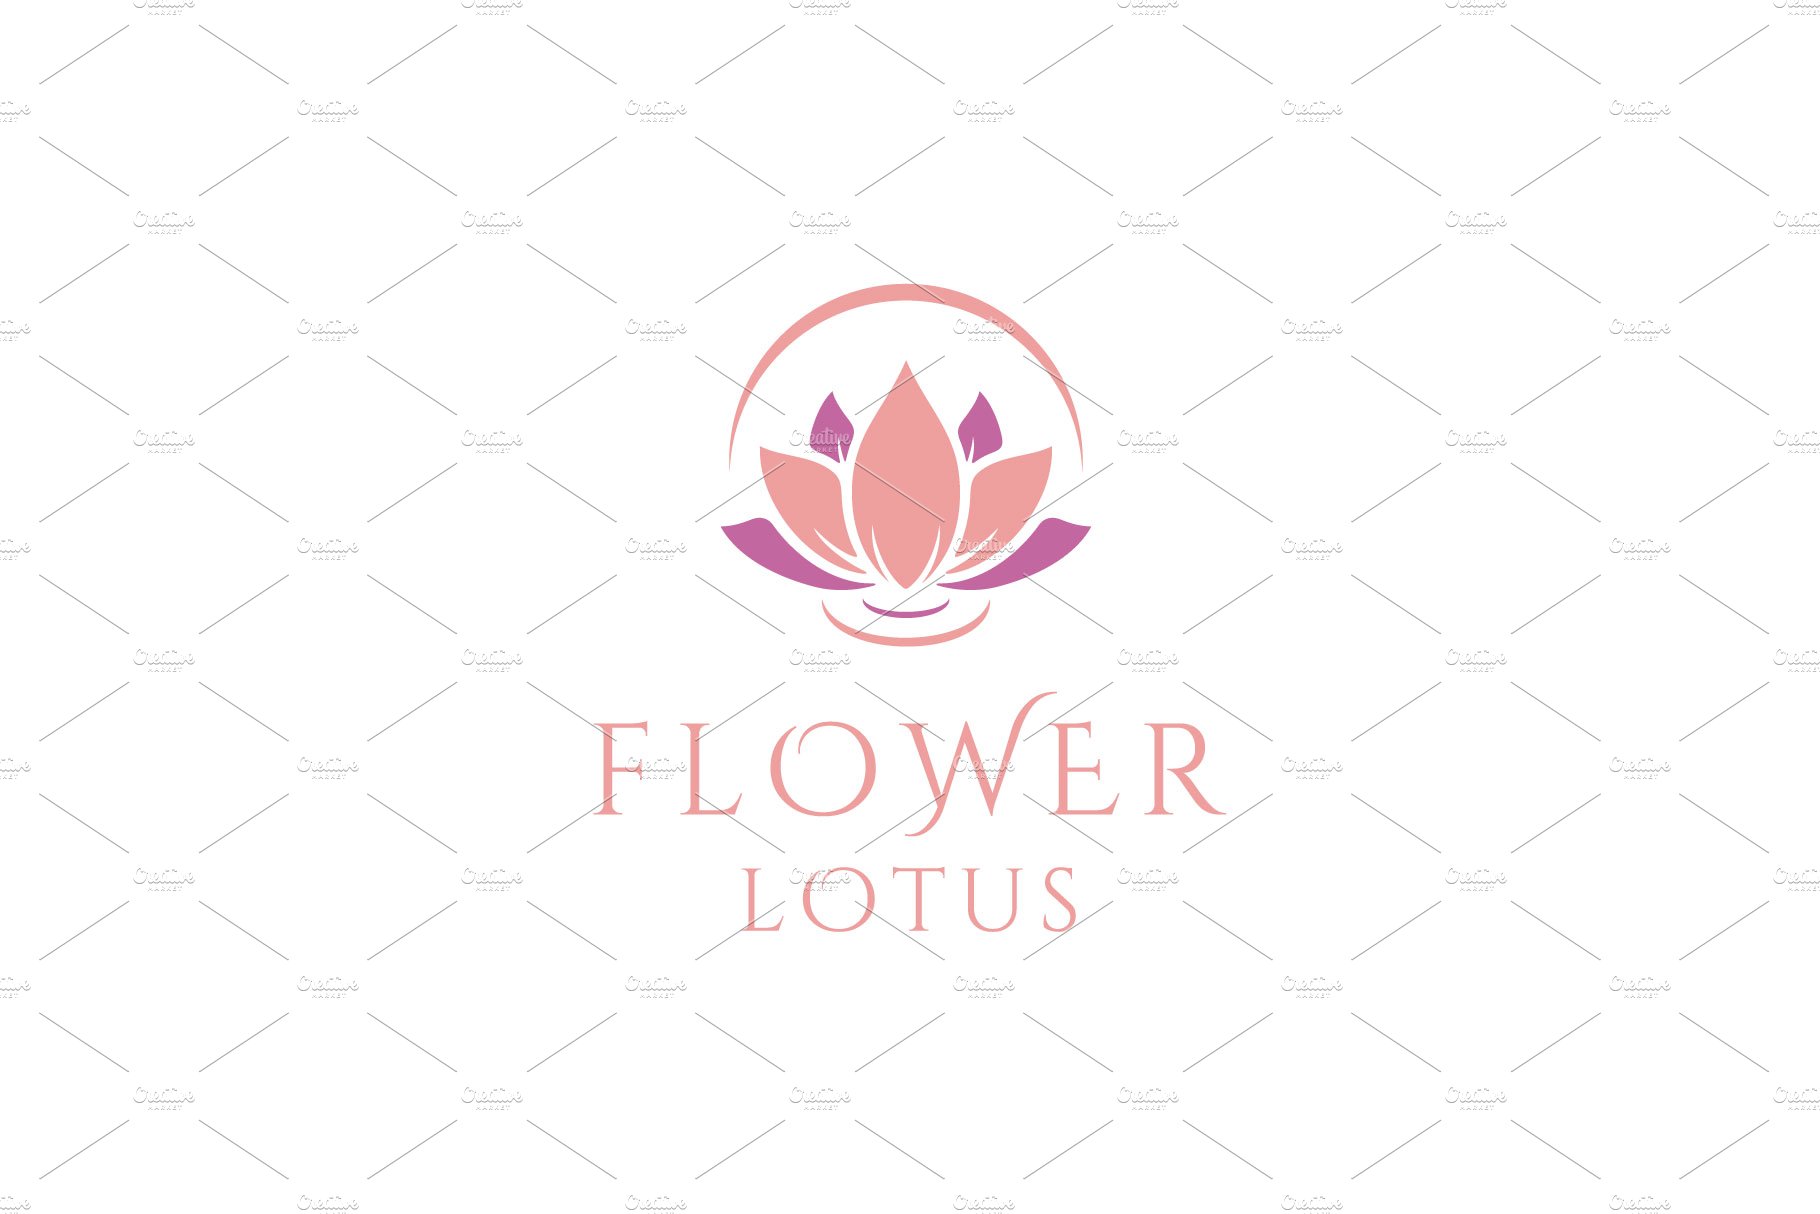 Floating Lotus Flower Spa logo cover image.